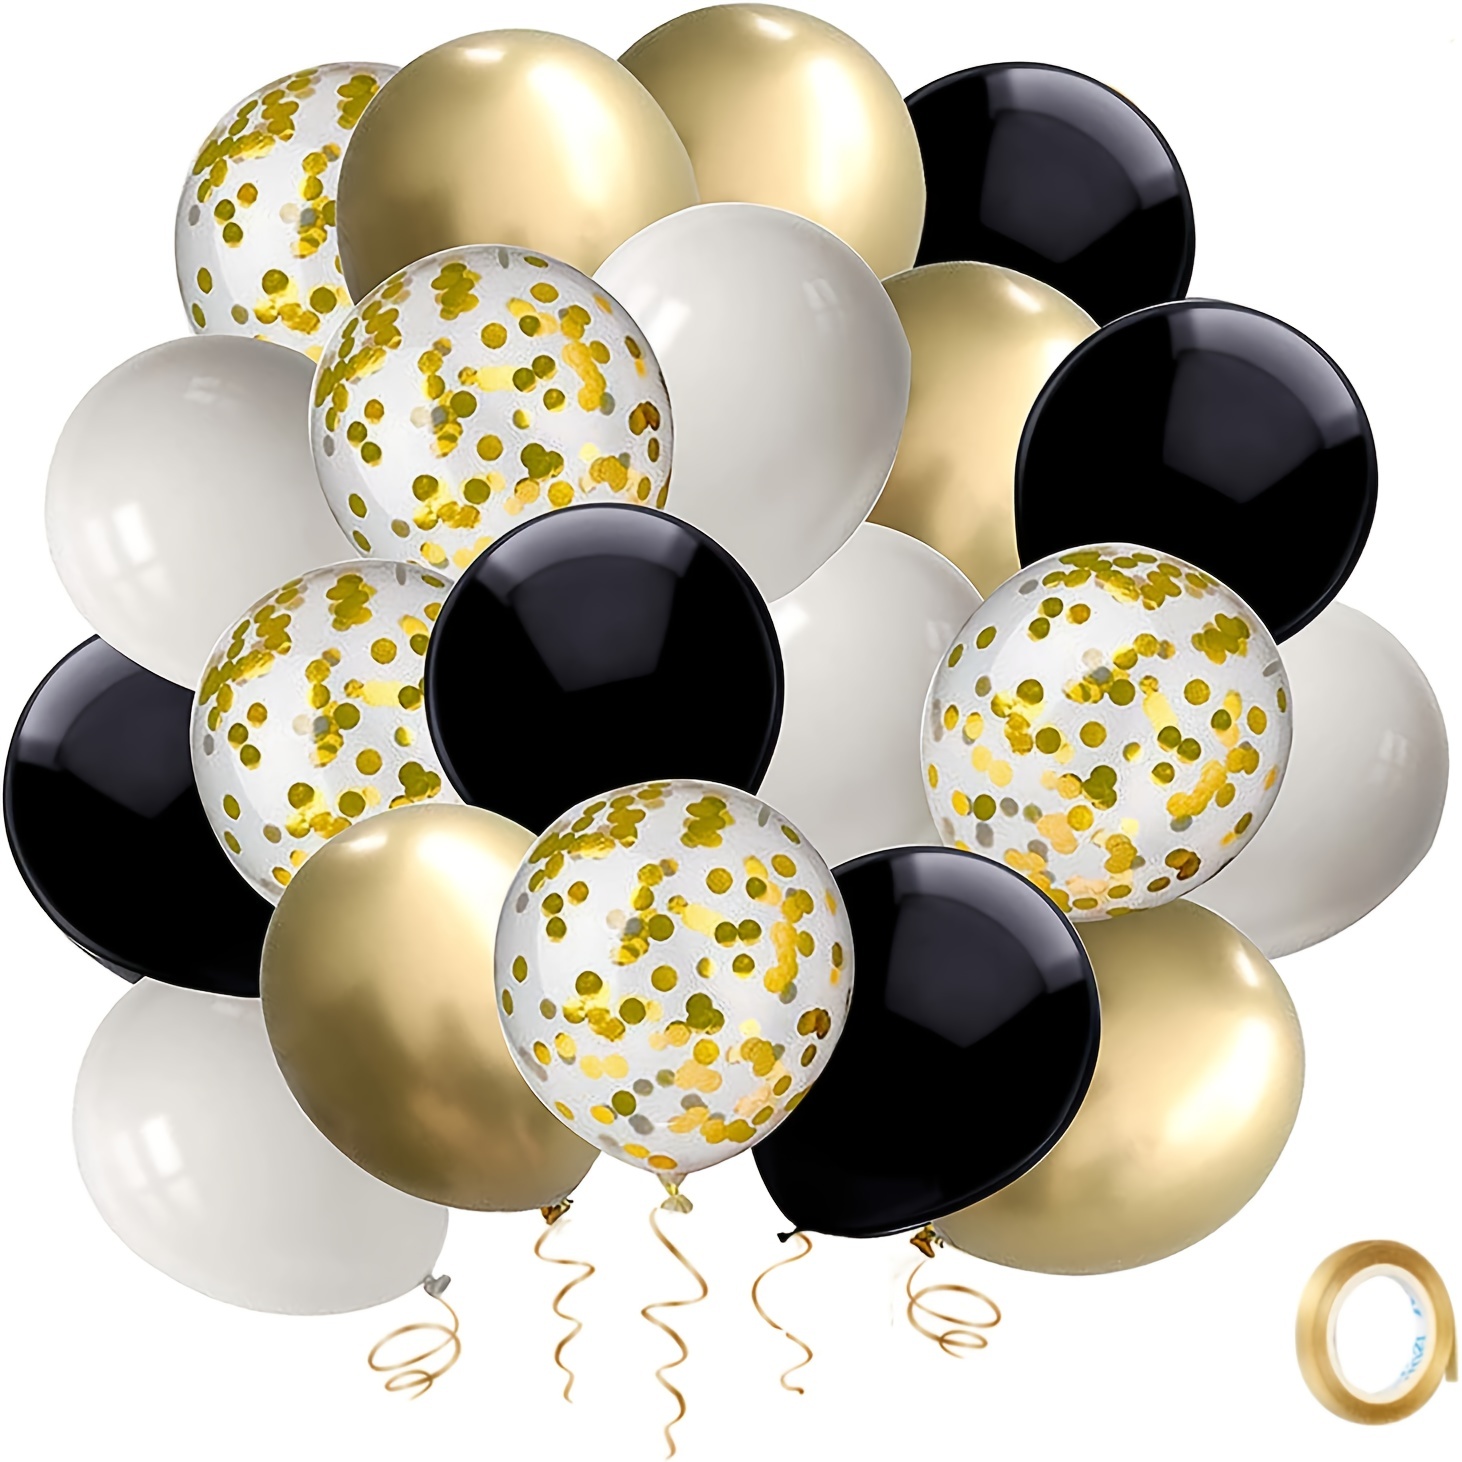 50pcs Graduation, Wedding, Birthday, Baby Shower Balloons with Golden Confetti